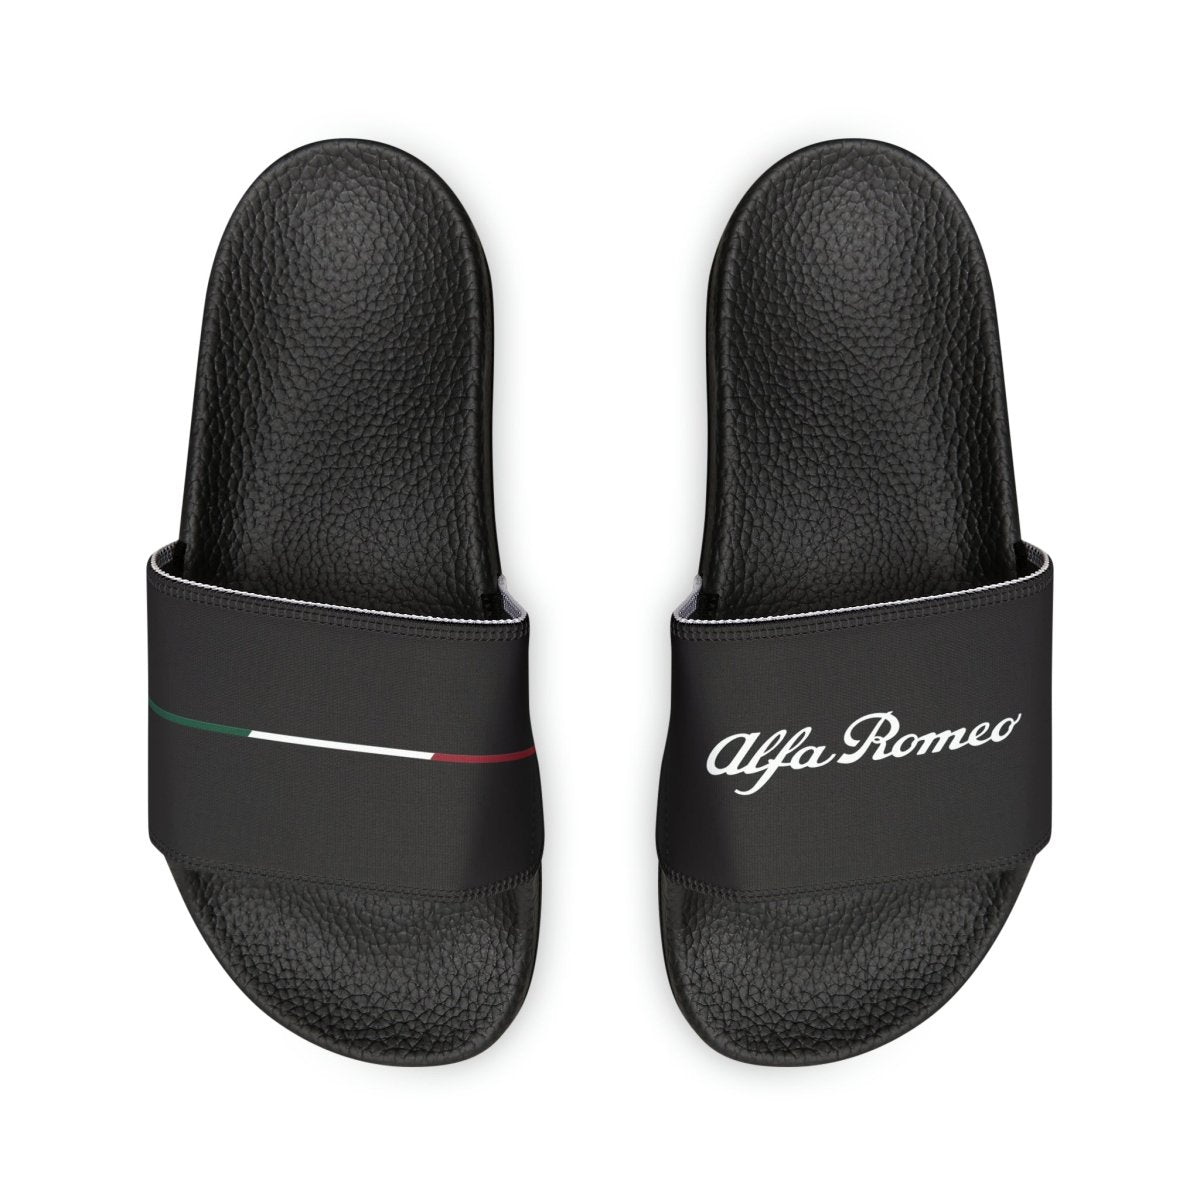 Alfa Romeo Script & Racing Flag Slide Sandals - Custom, Personalized - Shoes - AI Print Spot